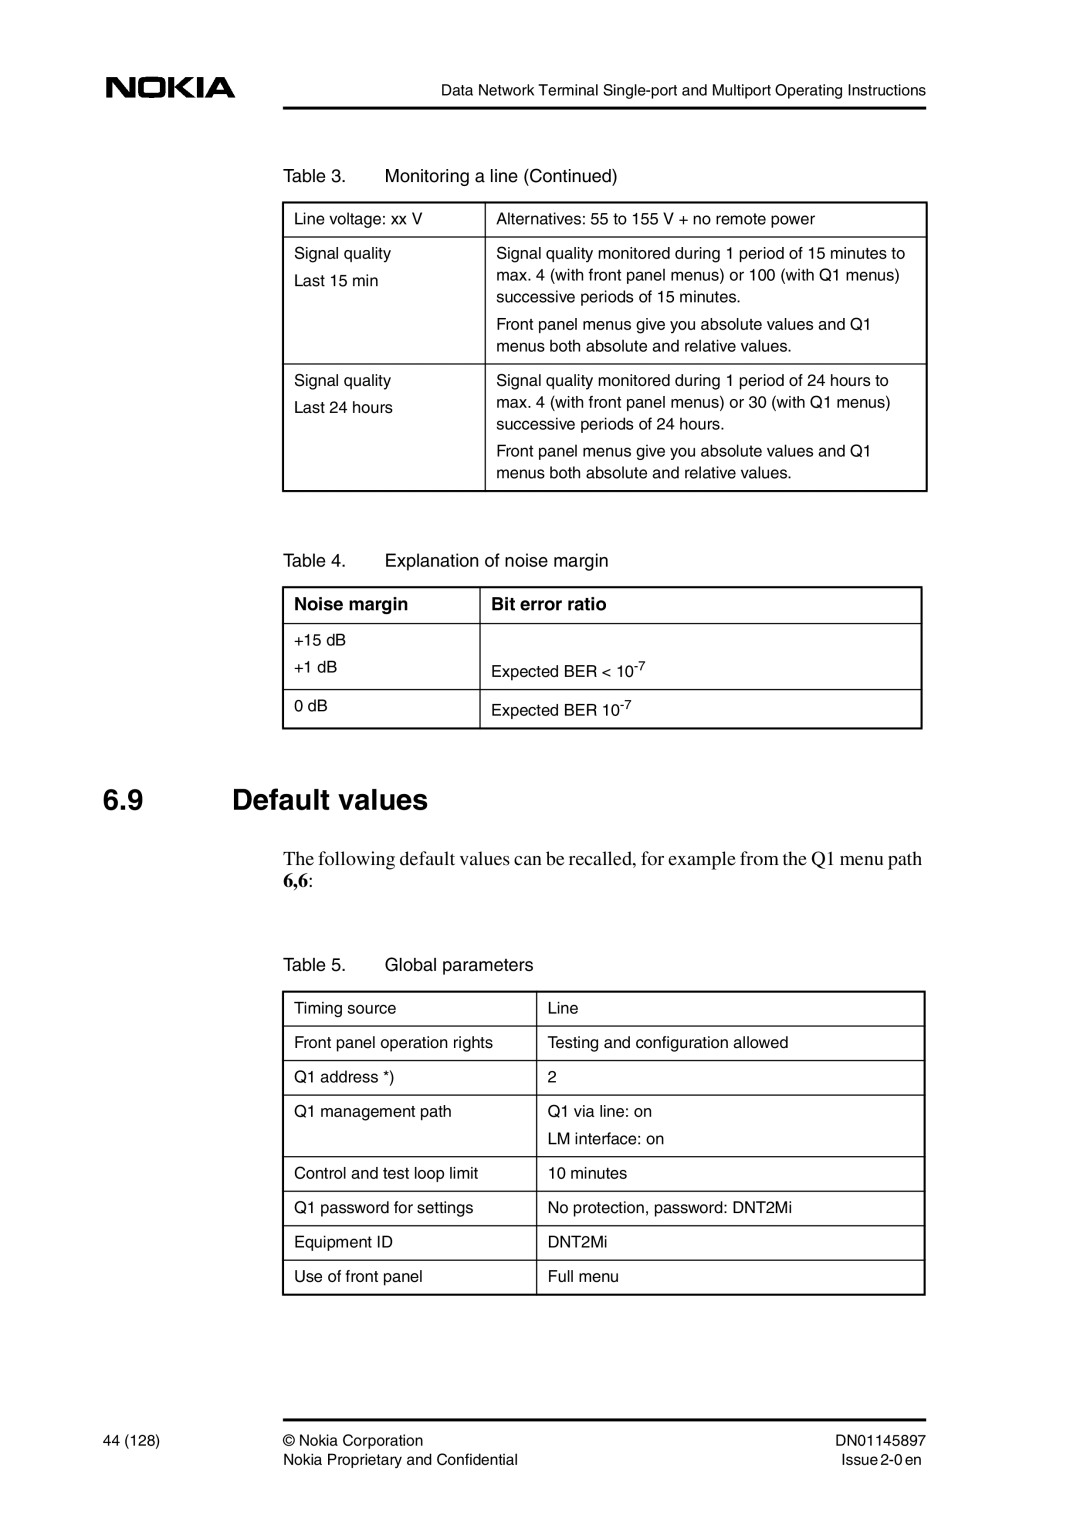 Nokia DNT2Mi sp/mp user manual Default values, Noise margin, Bit error ratio 